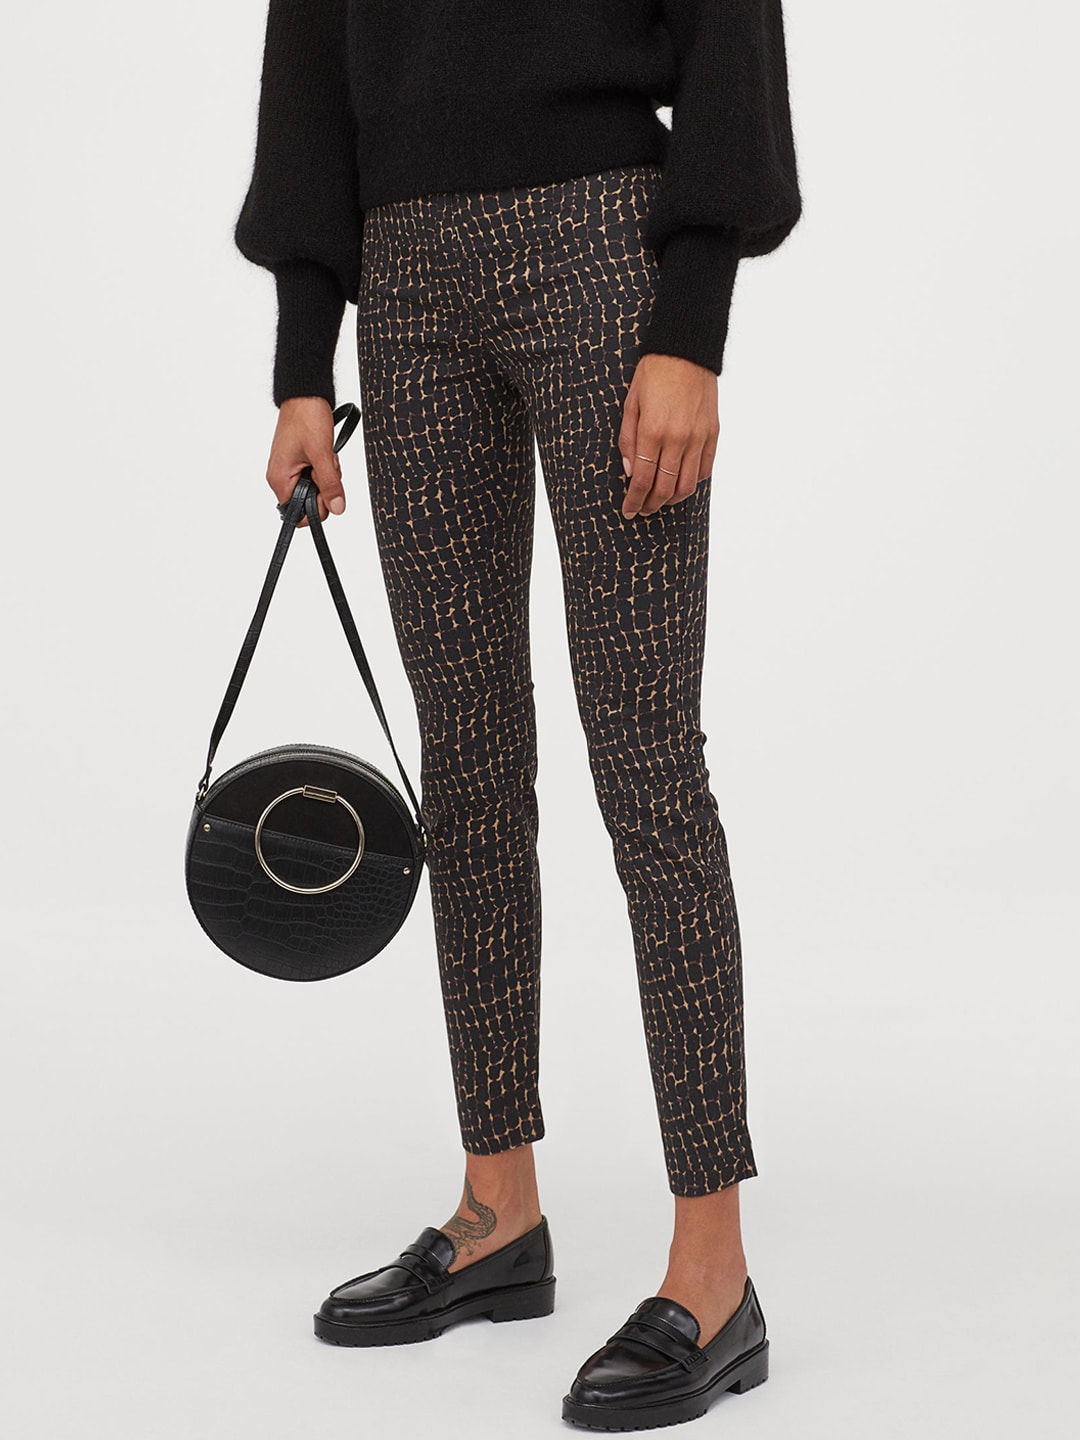 H&M Women Black & Beige Printed Superstretch Trousers